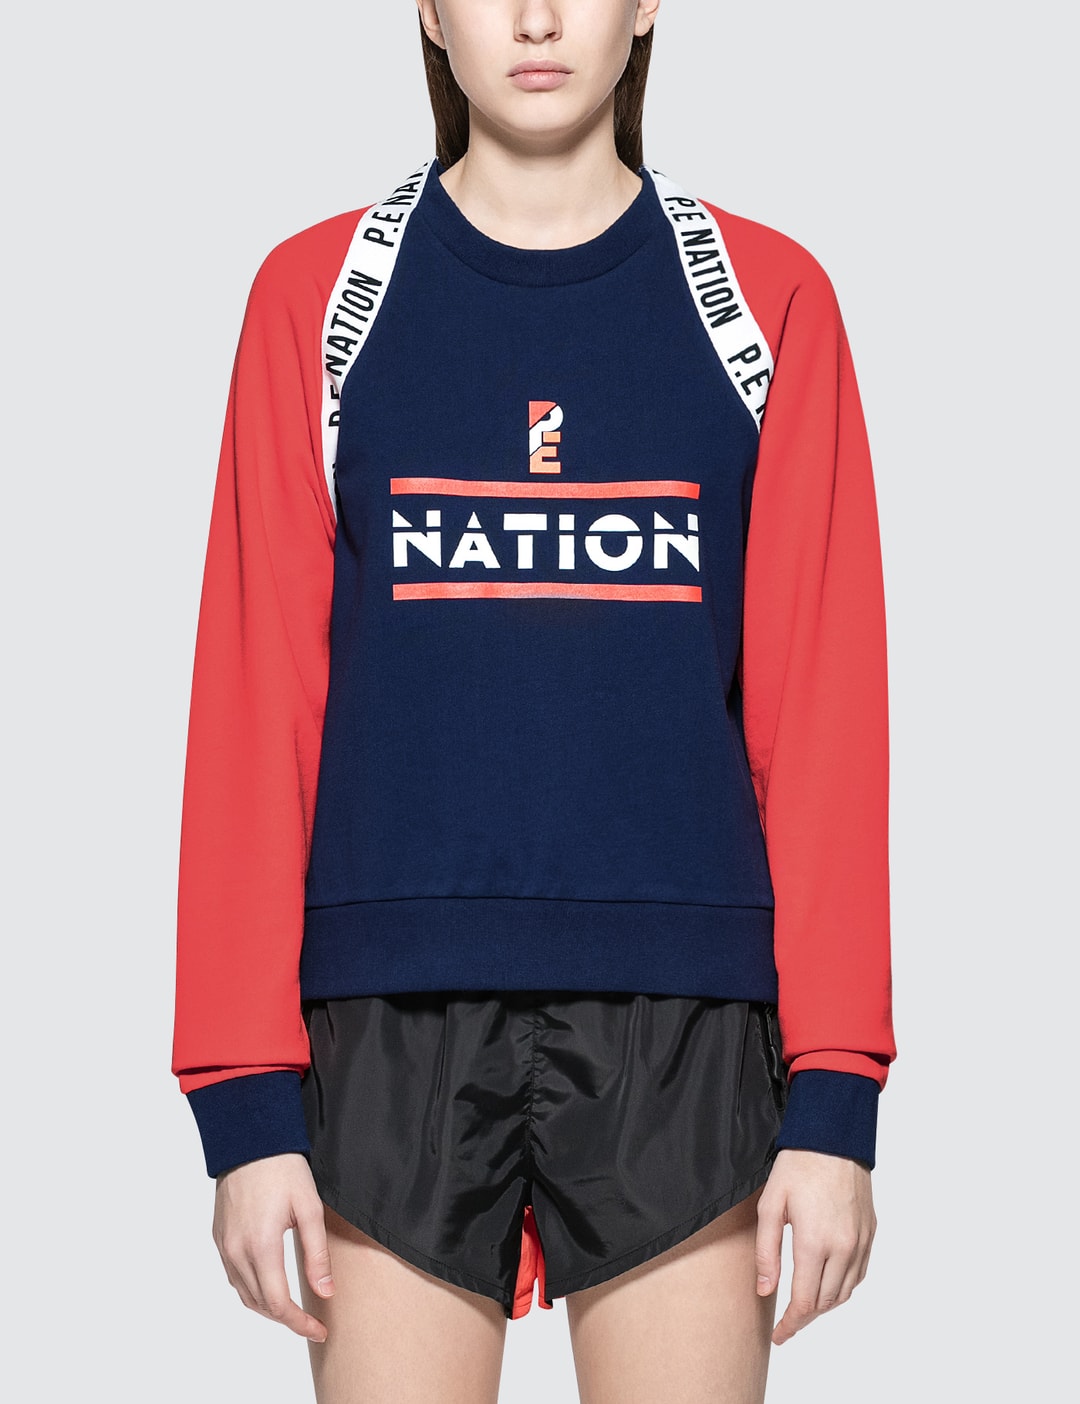 P.E Nation - The Wembley Sweatshirt | HBX - Globally Curated Fashion ...